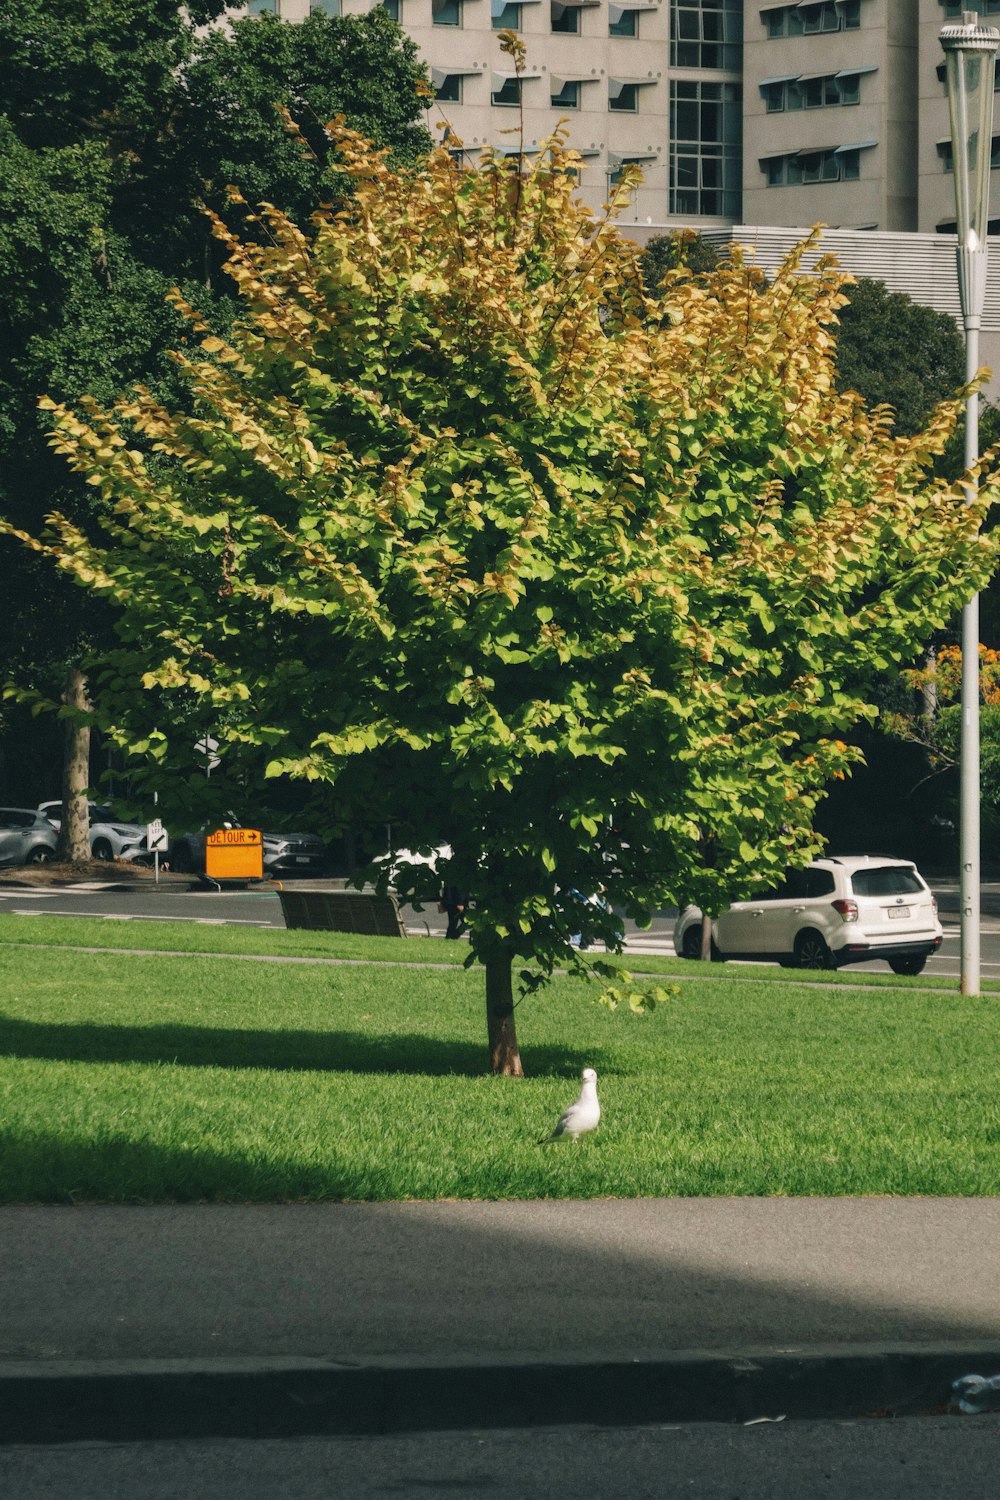 a bird sitting under a tree in a park